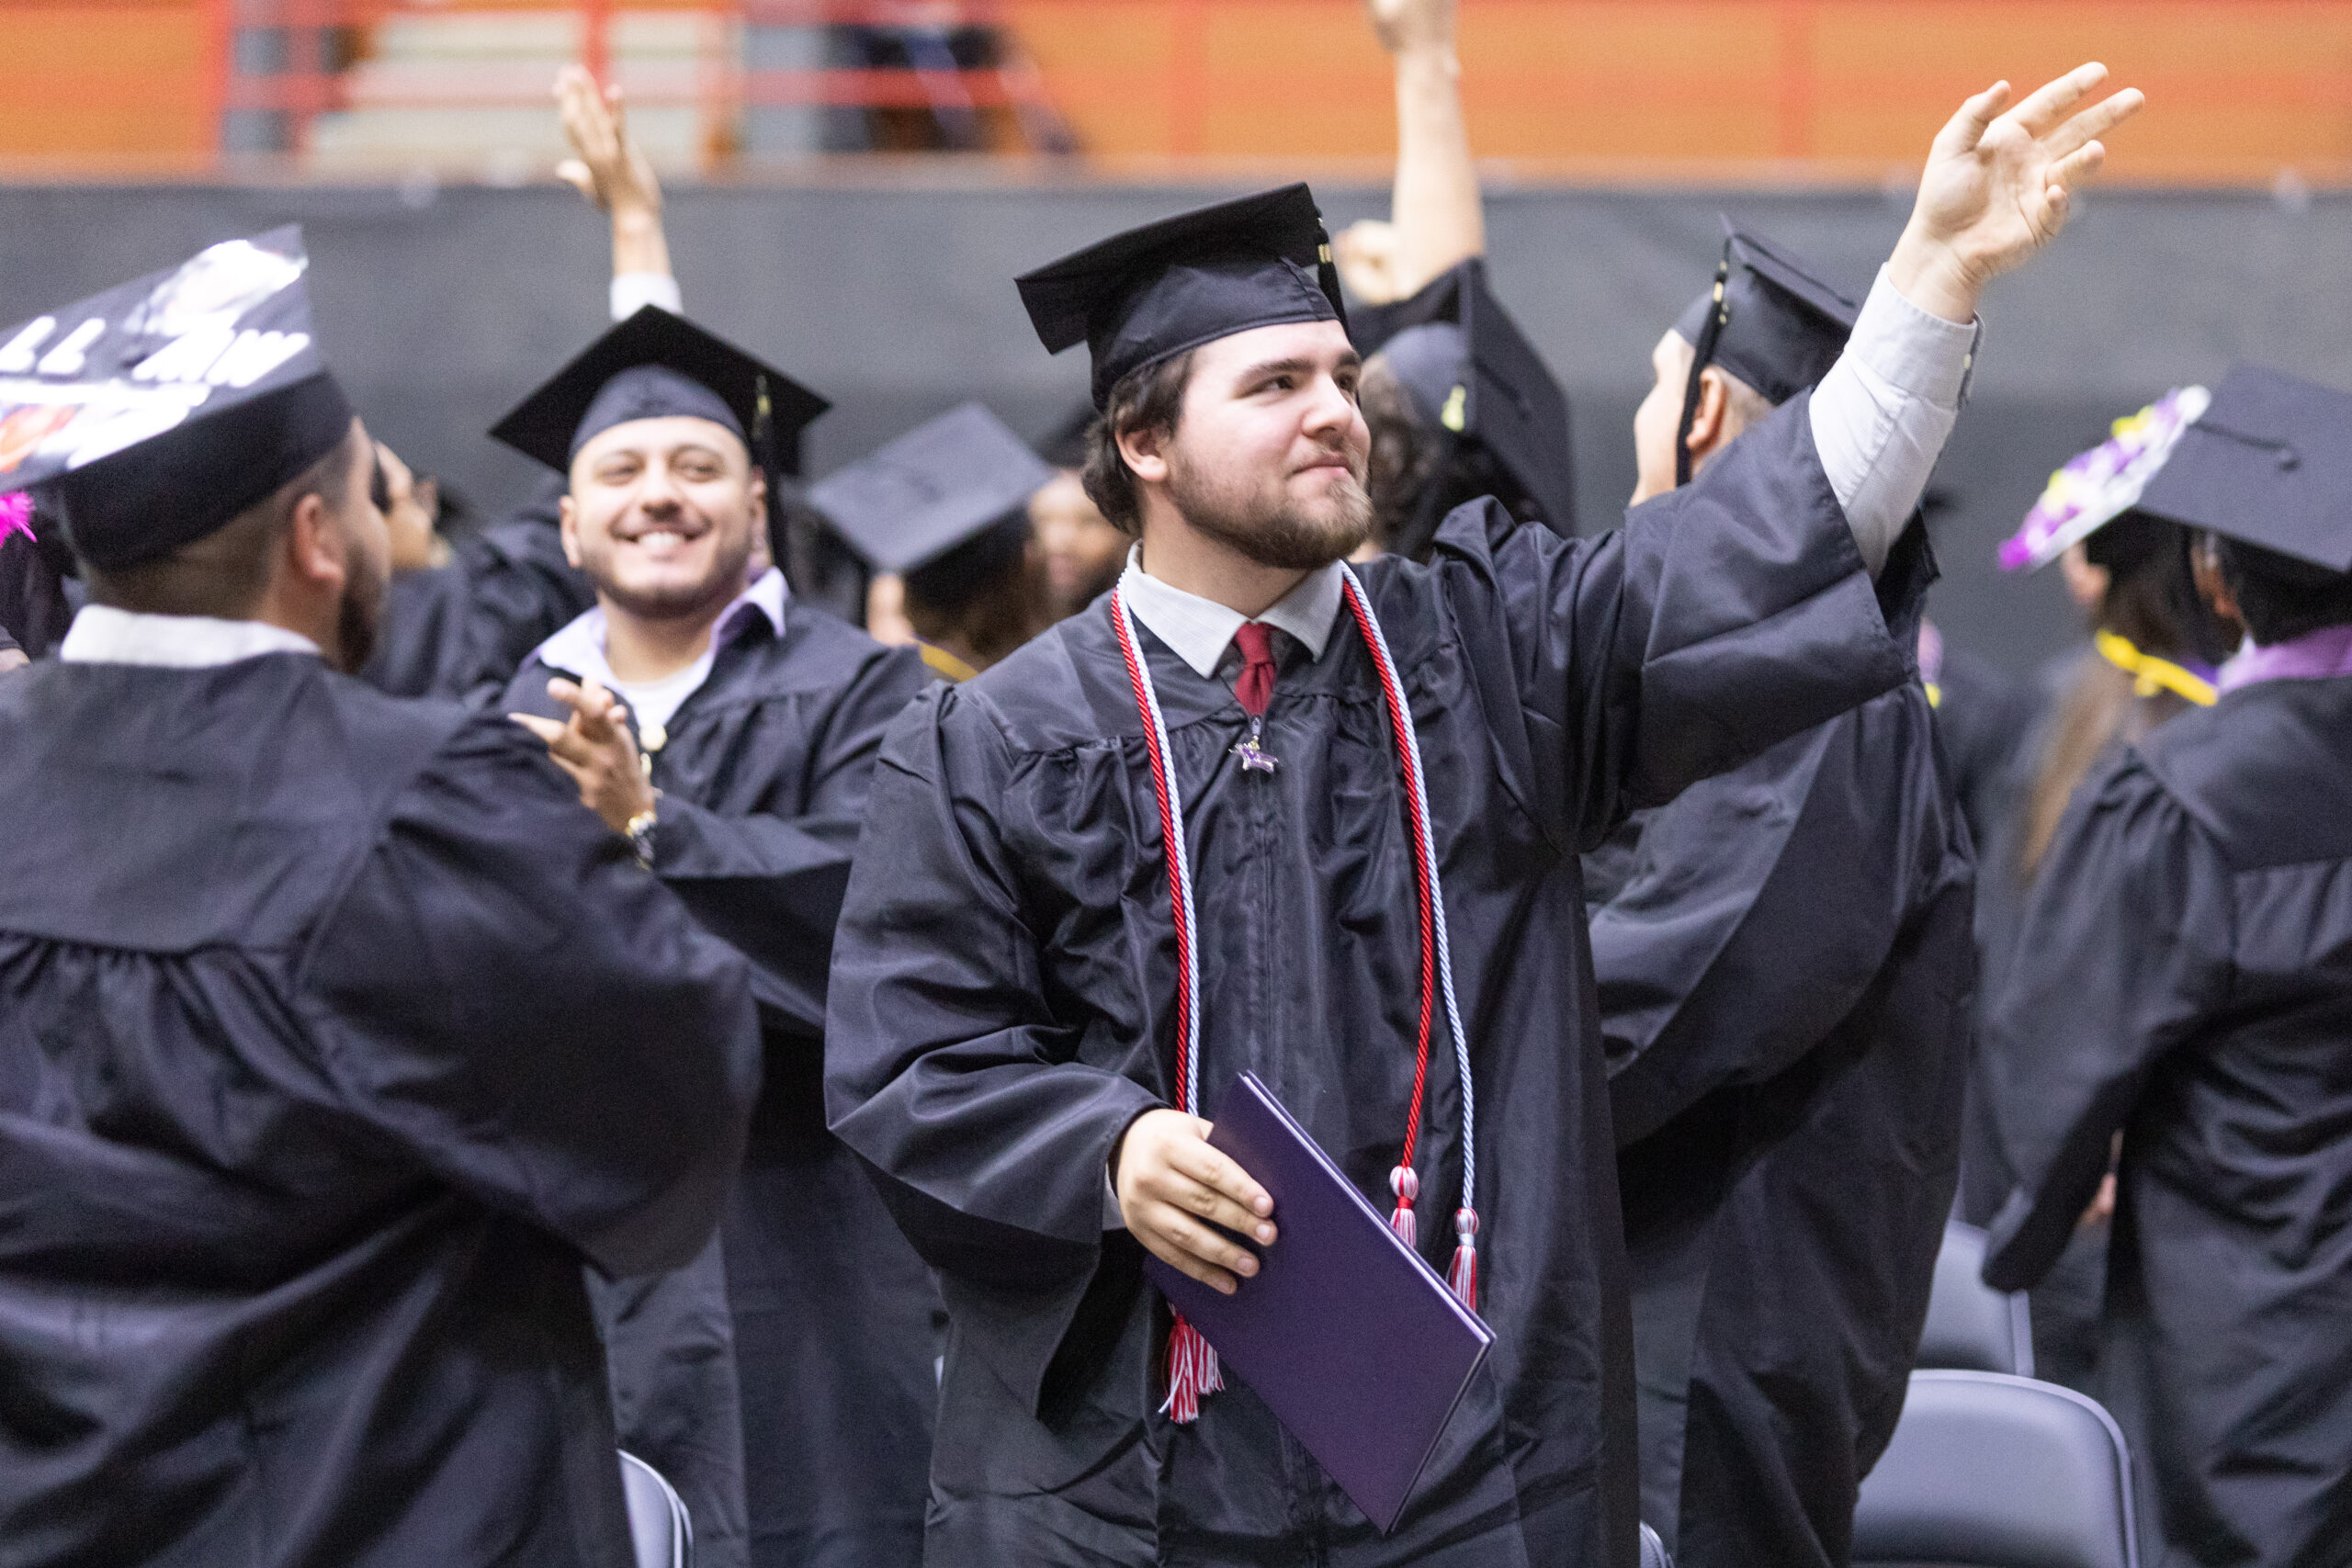 Graduate waving to crowd